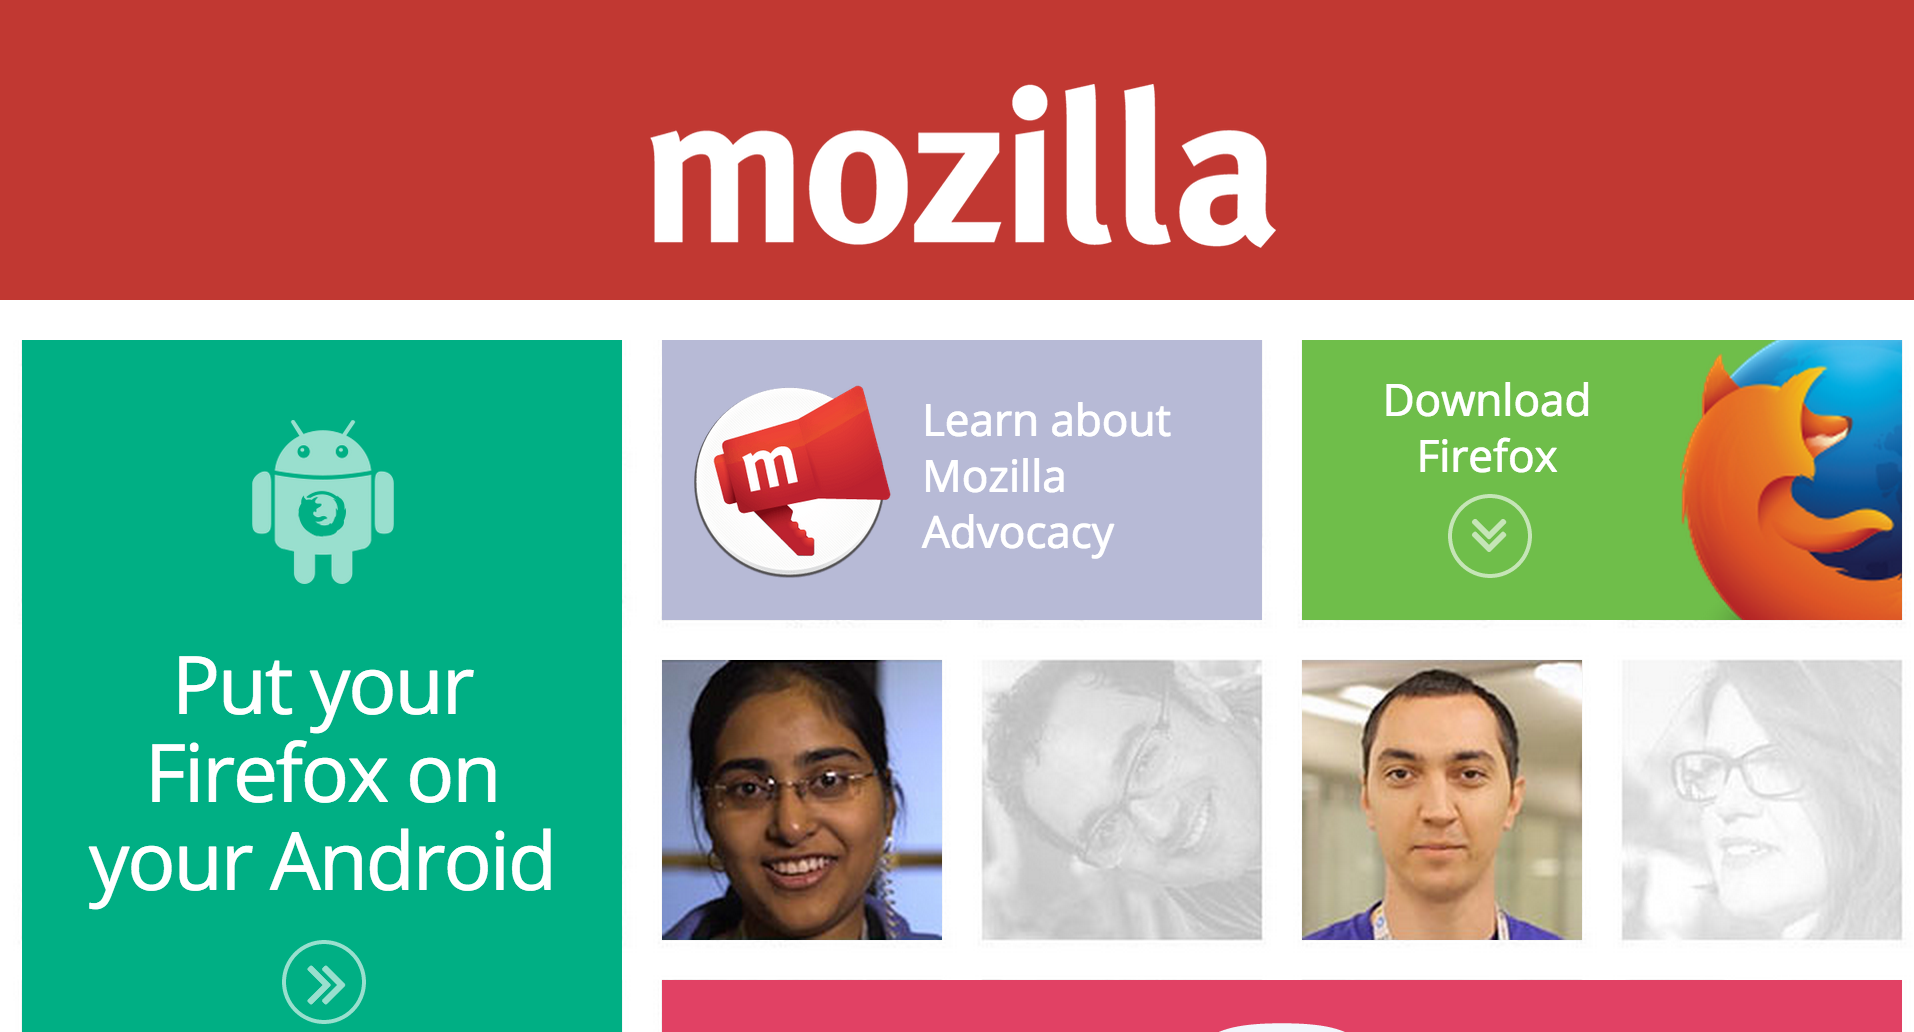 mozilla-website-screenshot